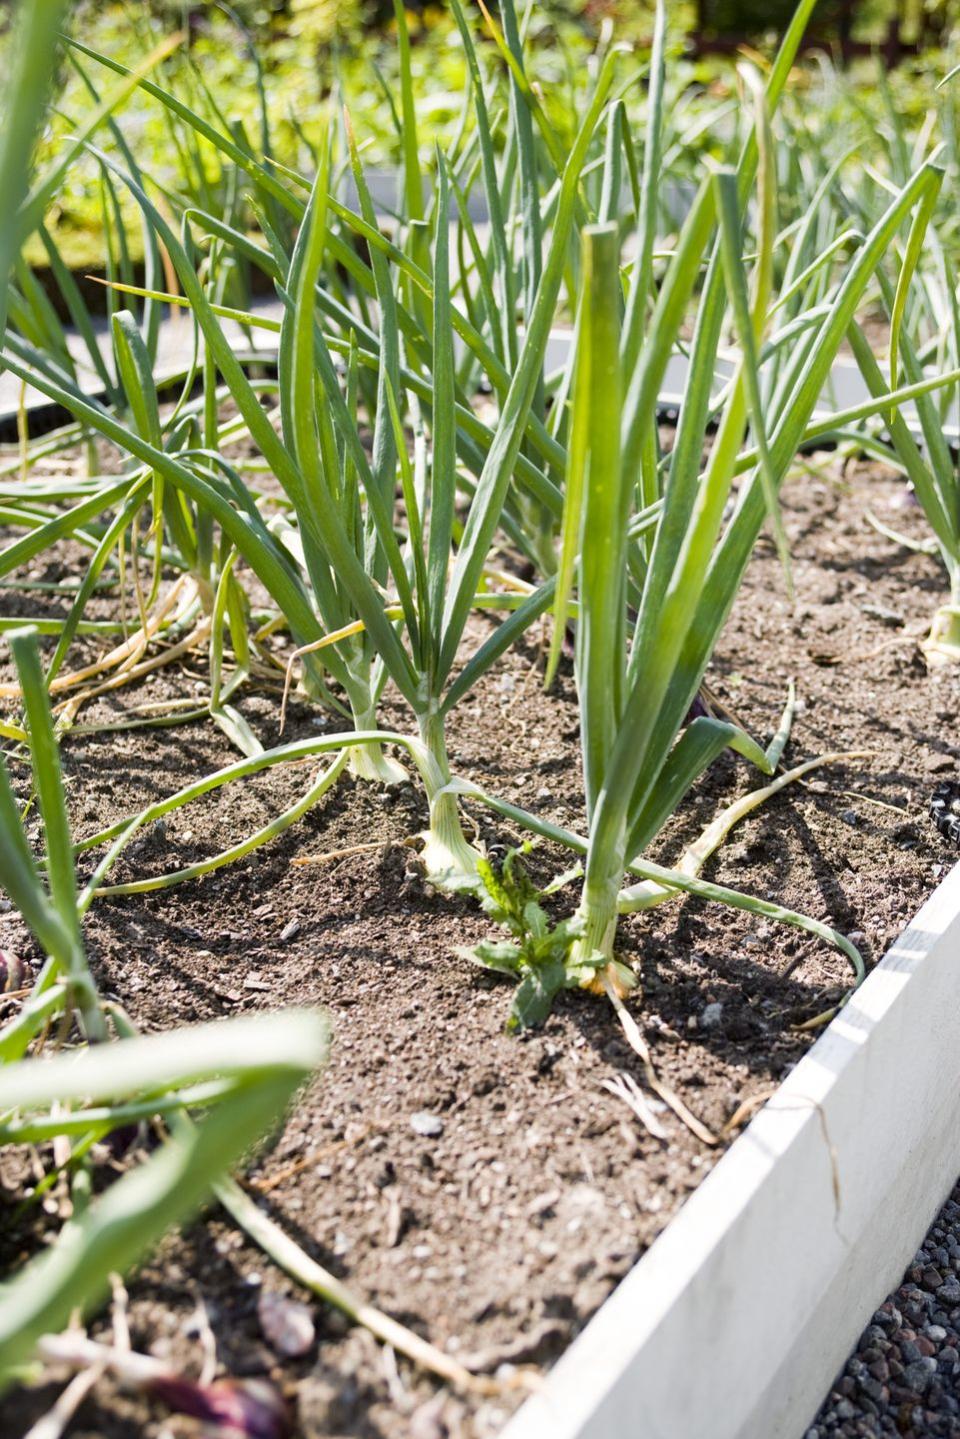 garlic growing in ground